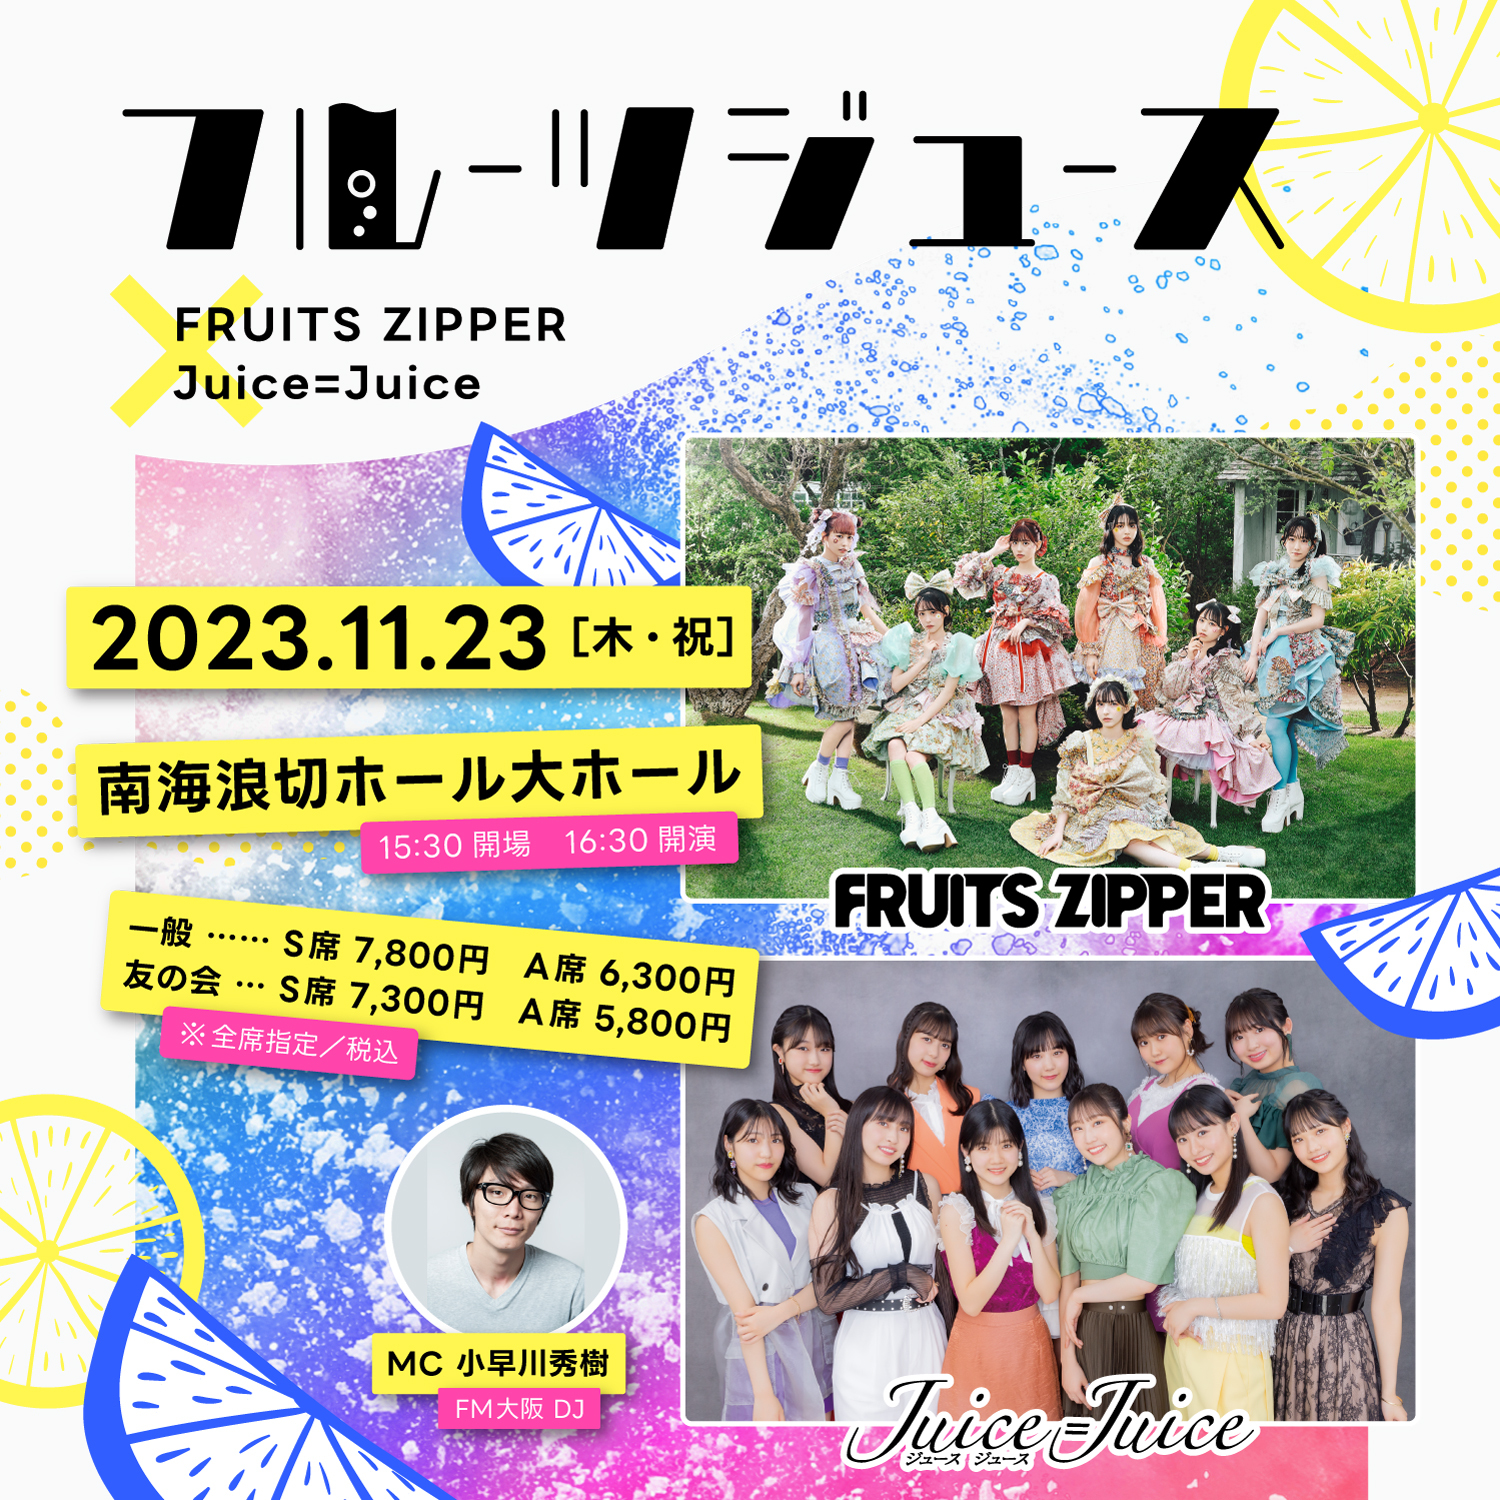 FRUITS ZIPPER × Juice=Juice出演のイベント『フルーツジュース』が ...